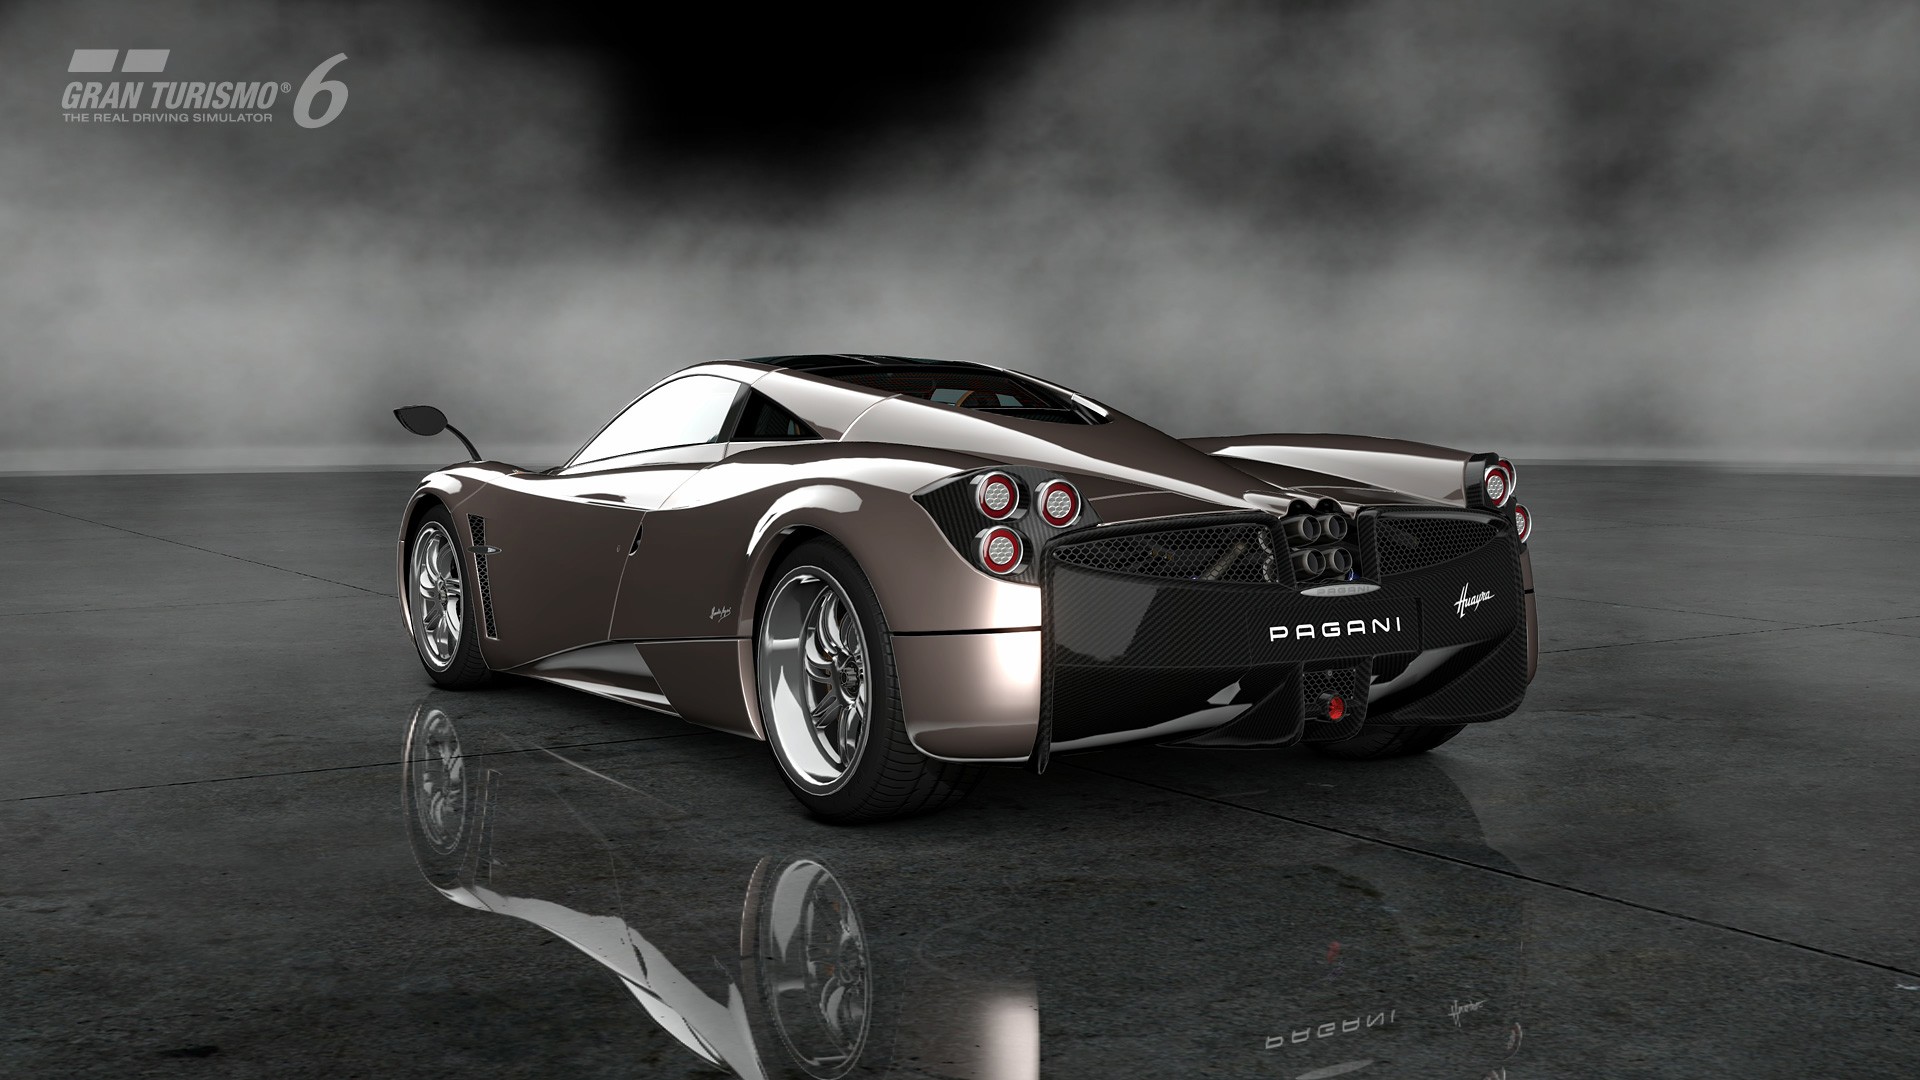 General 1920x1080 car video games Gran Turismo 6 reflection CGI digital art Pagani